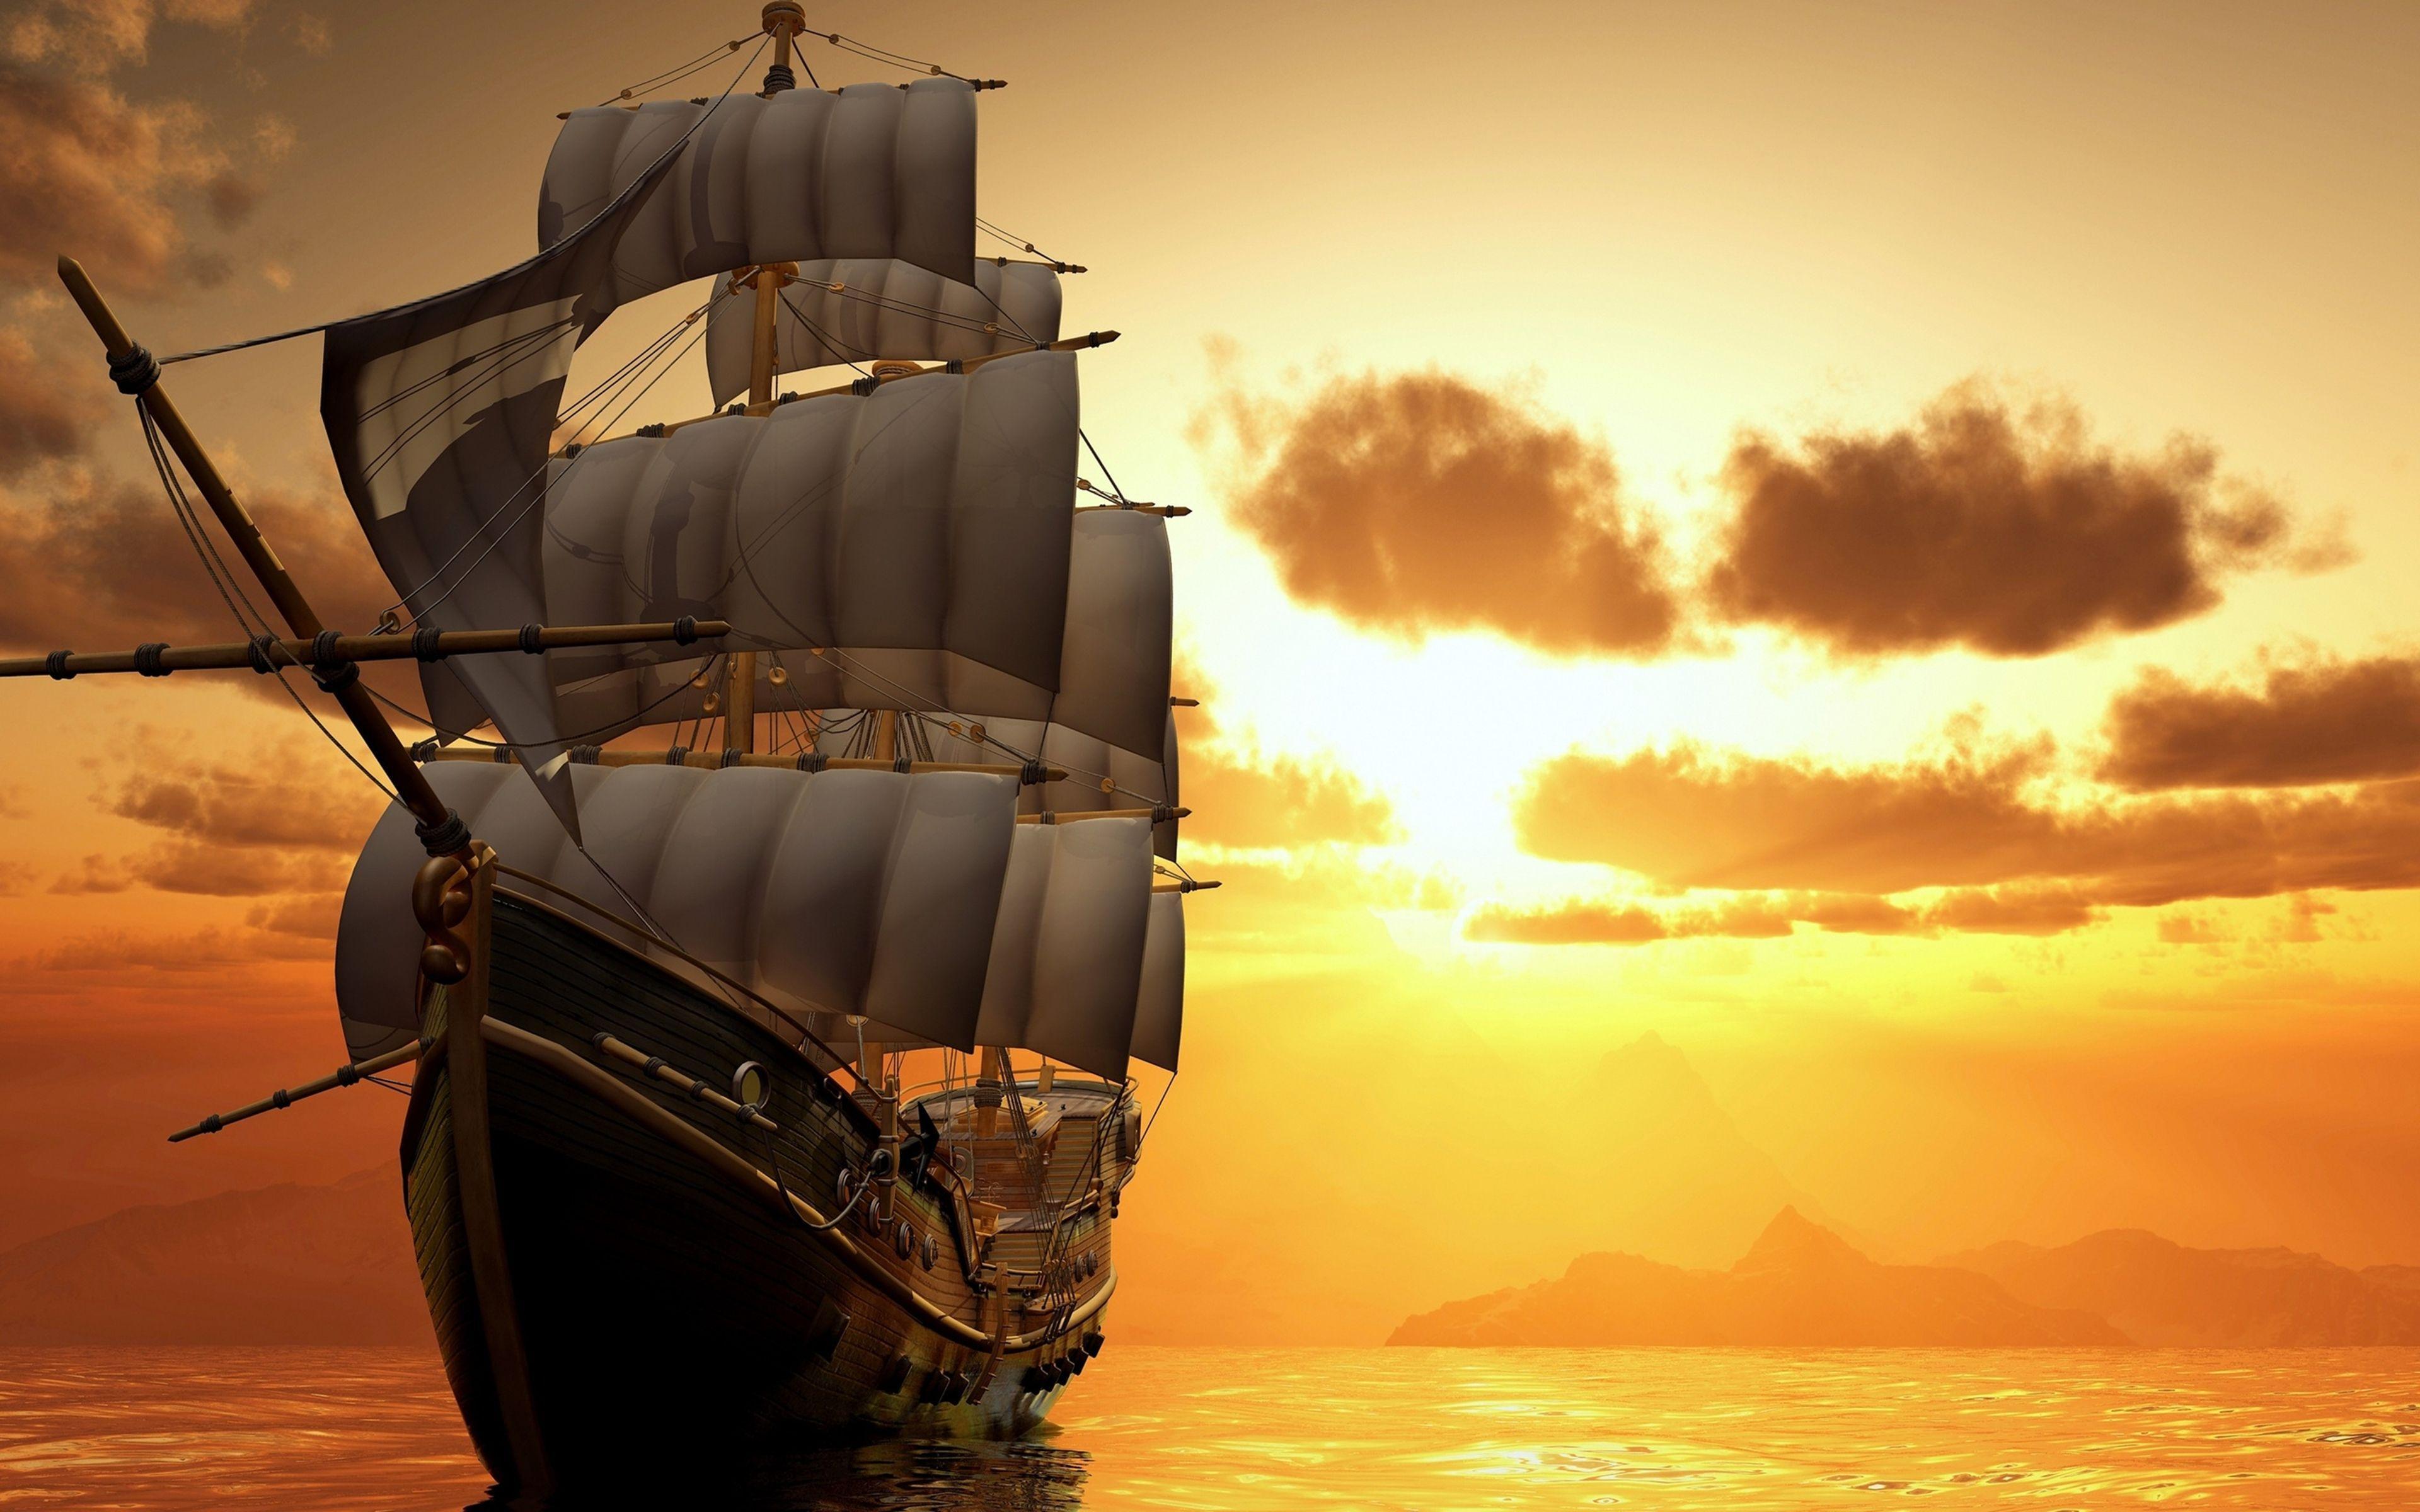 HD Sailing Ship Wallpaper, Background, Image. Design